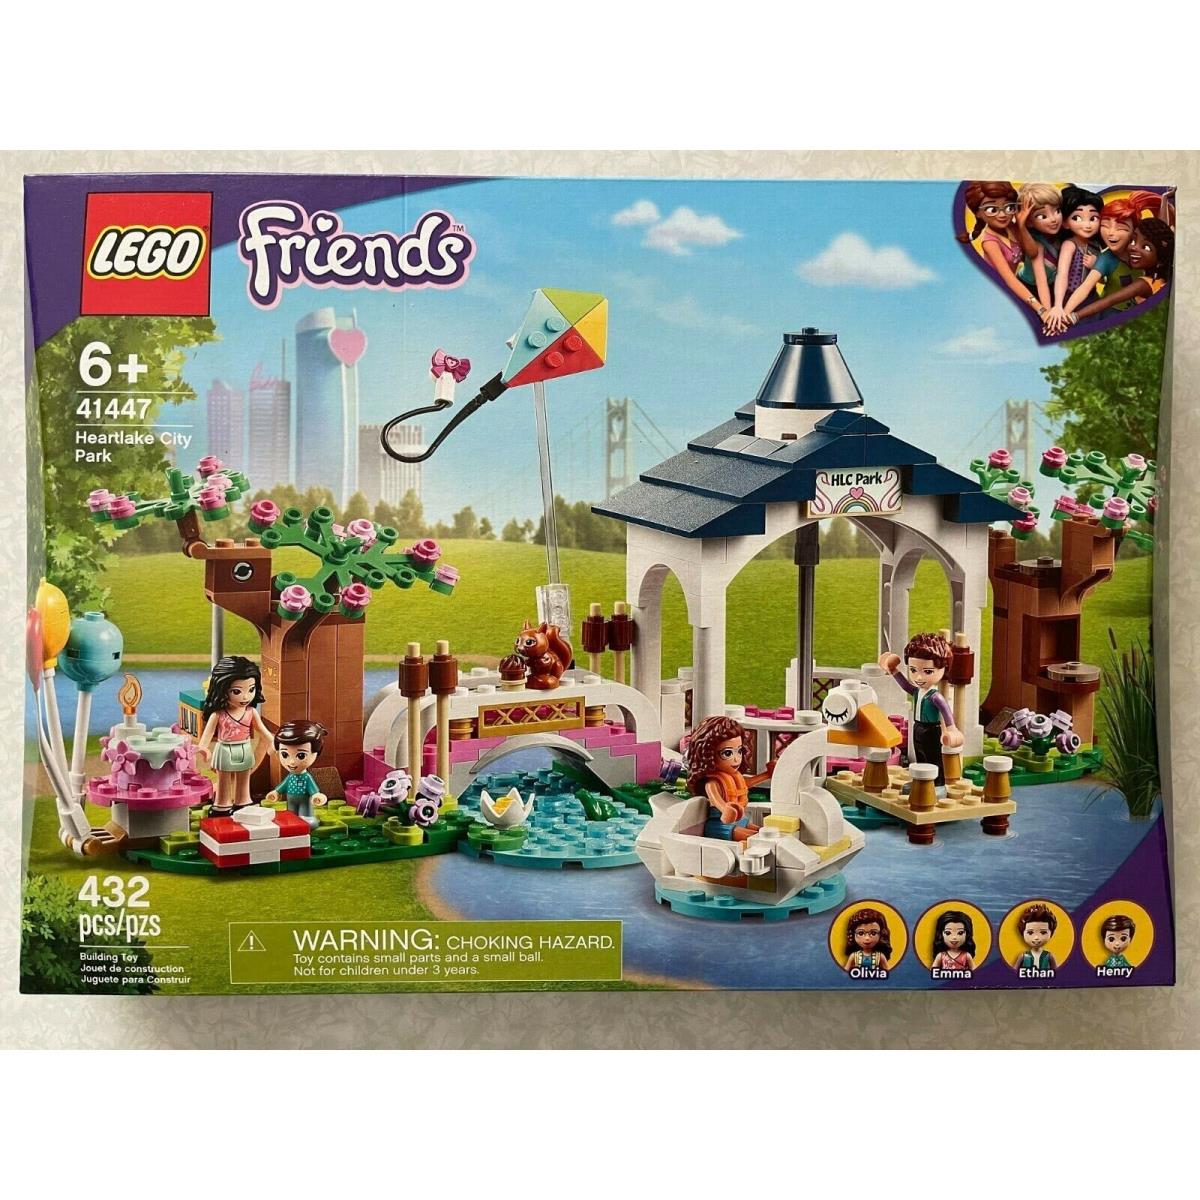 Lego Friends 41447 Heartlake City Park Nisb Age 6+